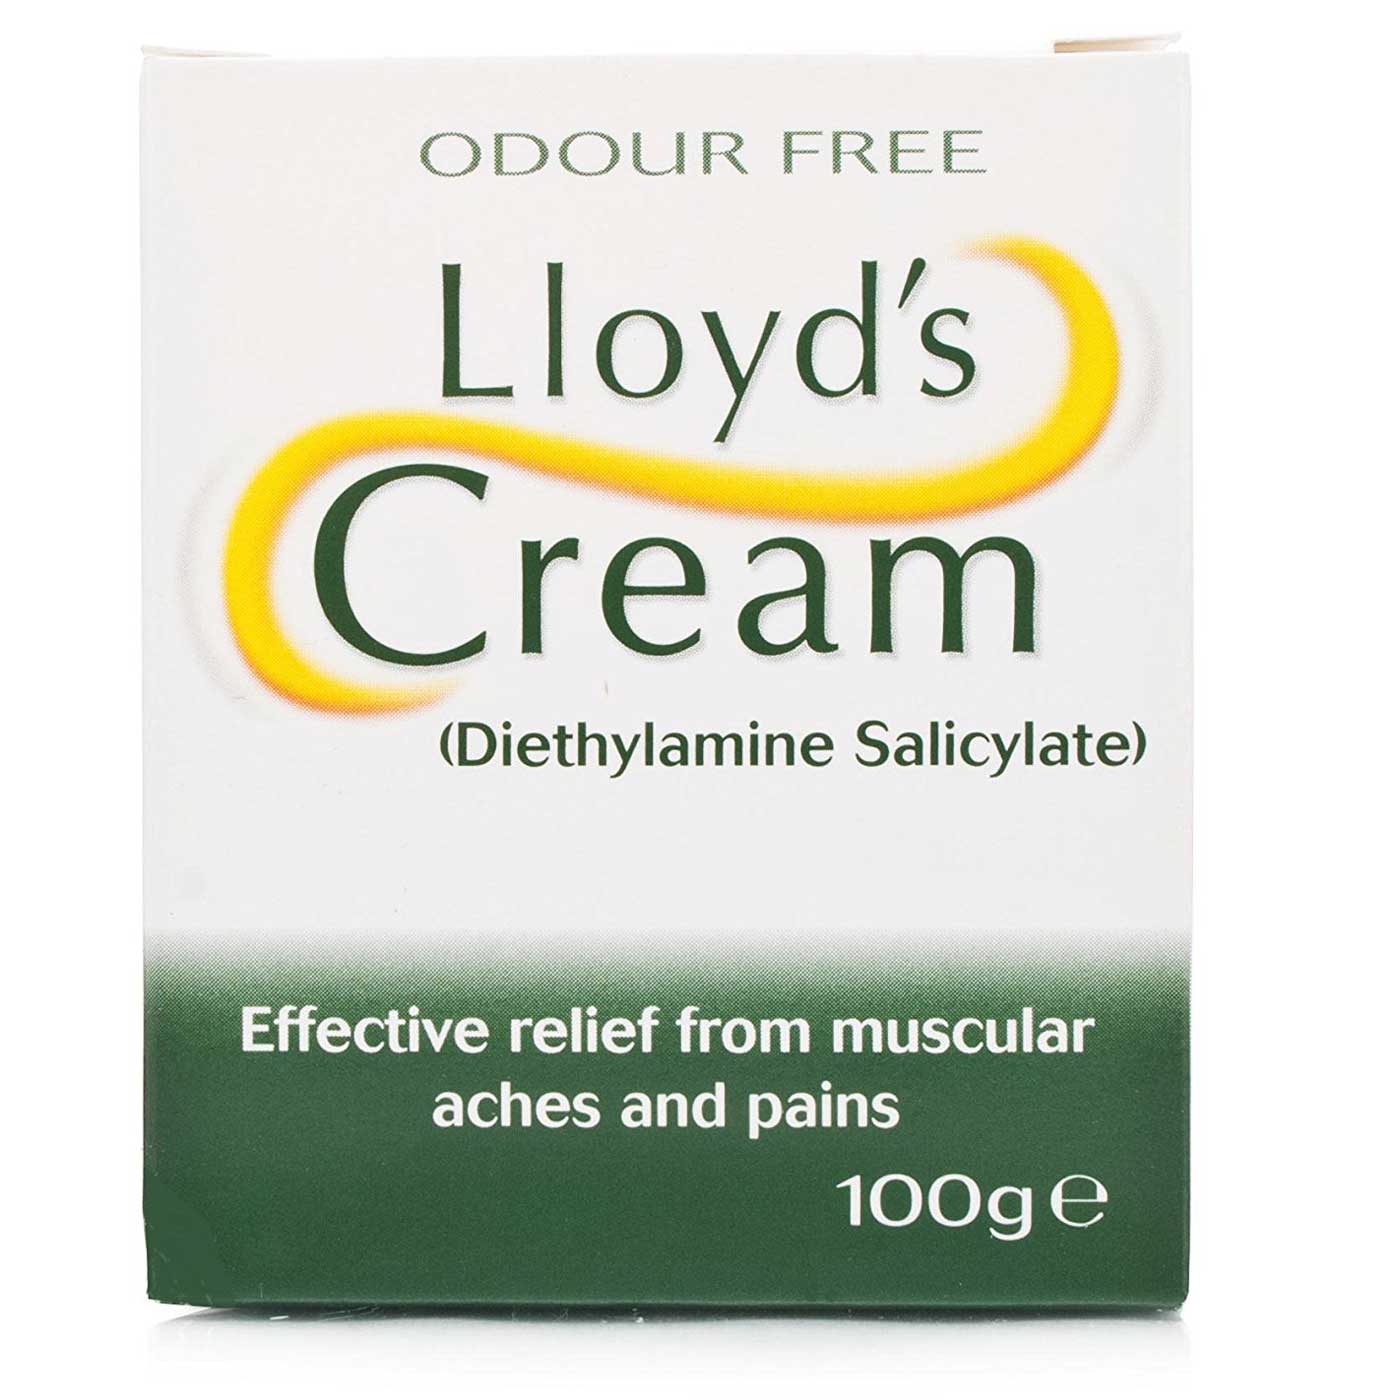 Lloyd's Cream